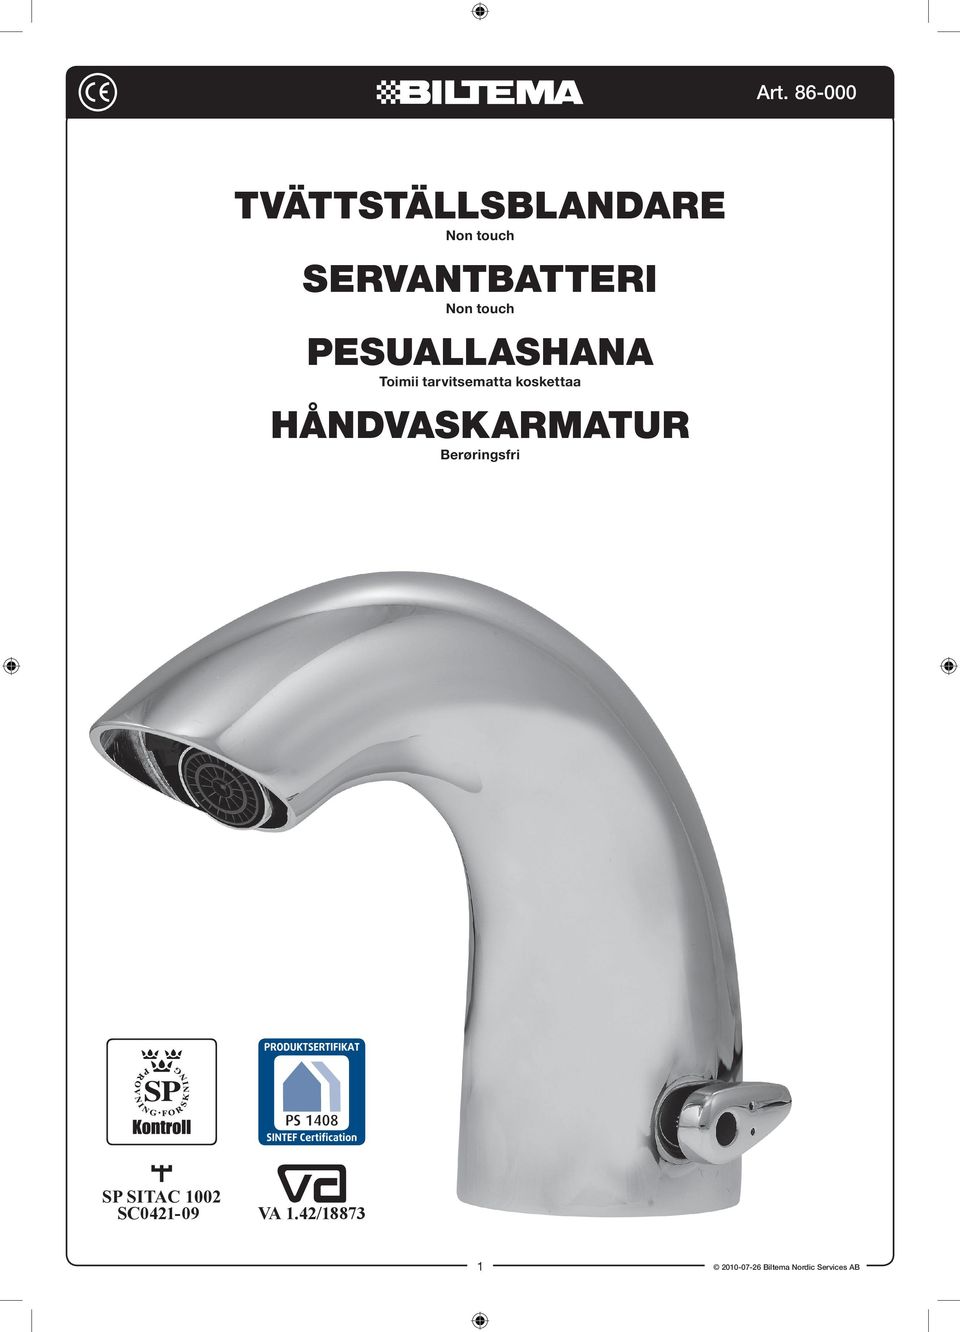 Håndvaskarmatur Berøringsfri PS 1408 SP SITAC 1002